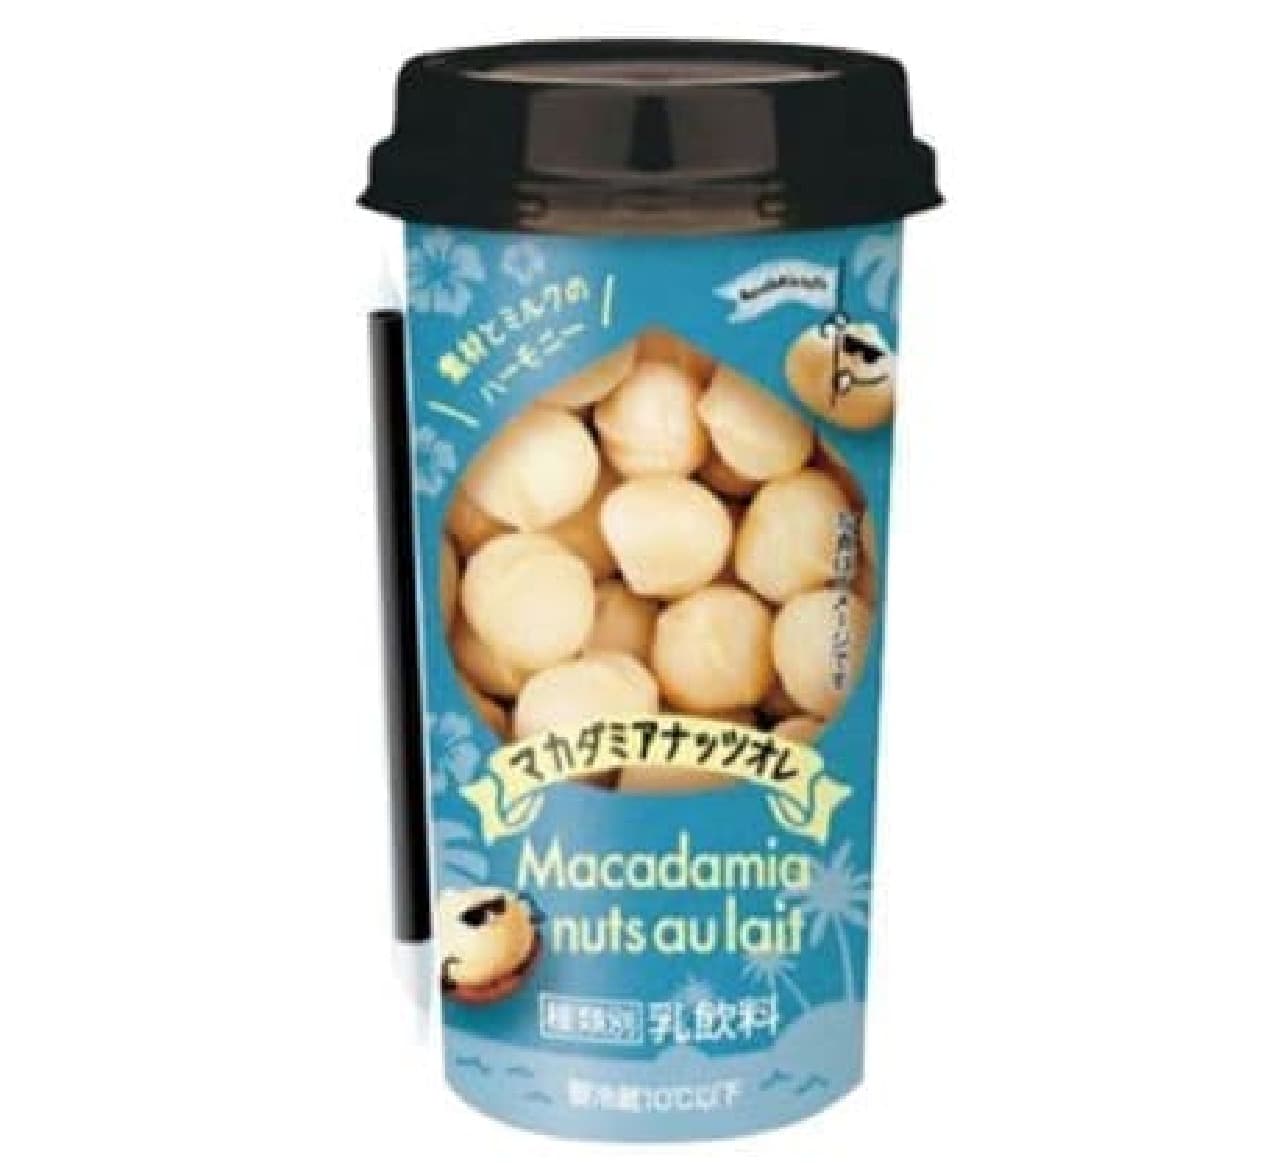 FamilyMart "Macadamia Nut Ore"